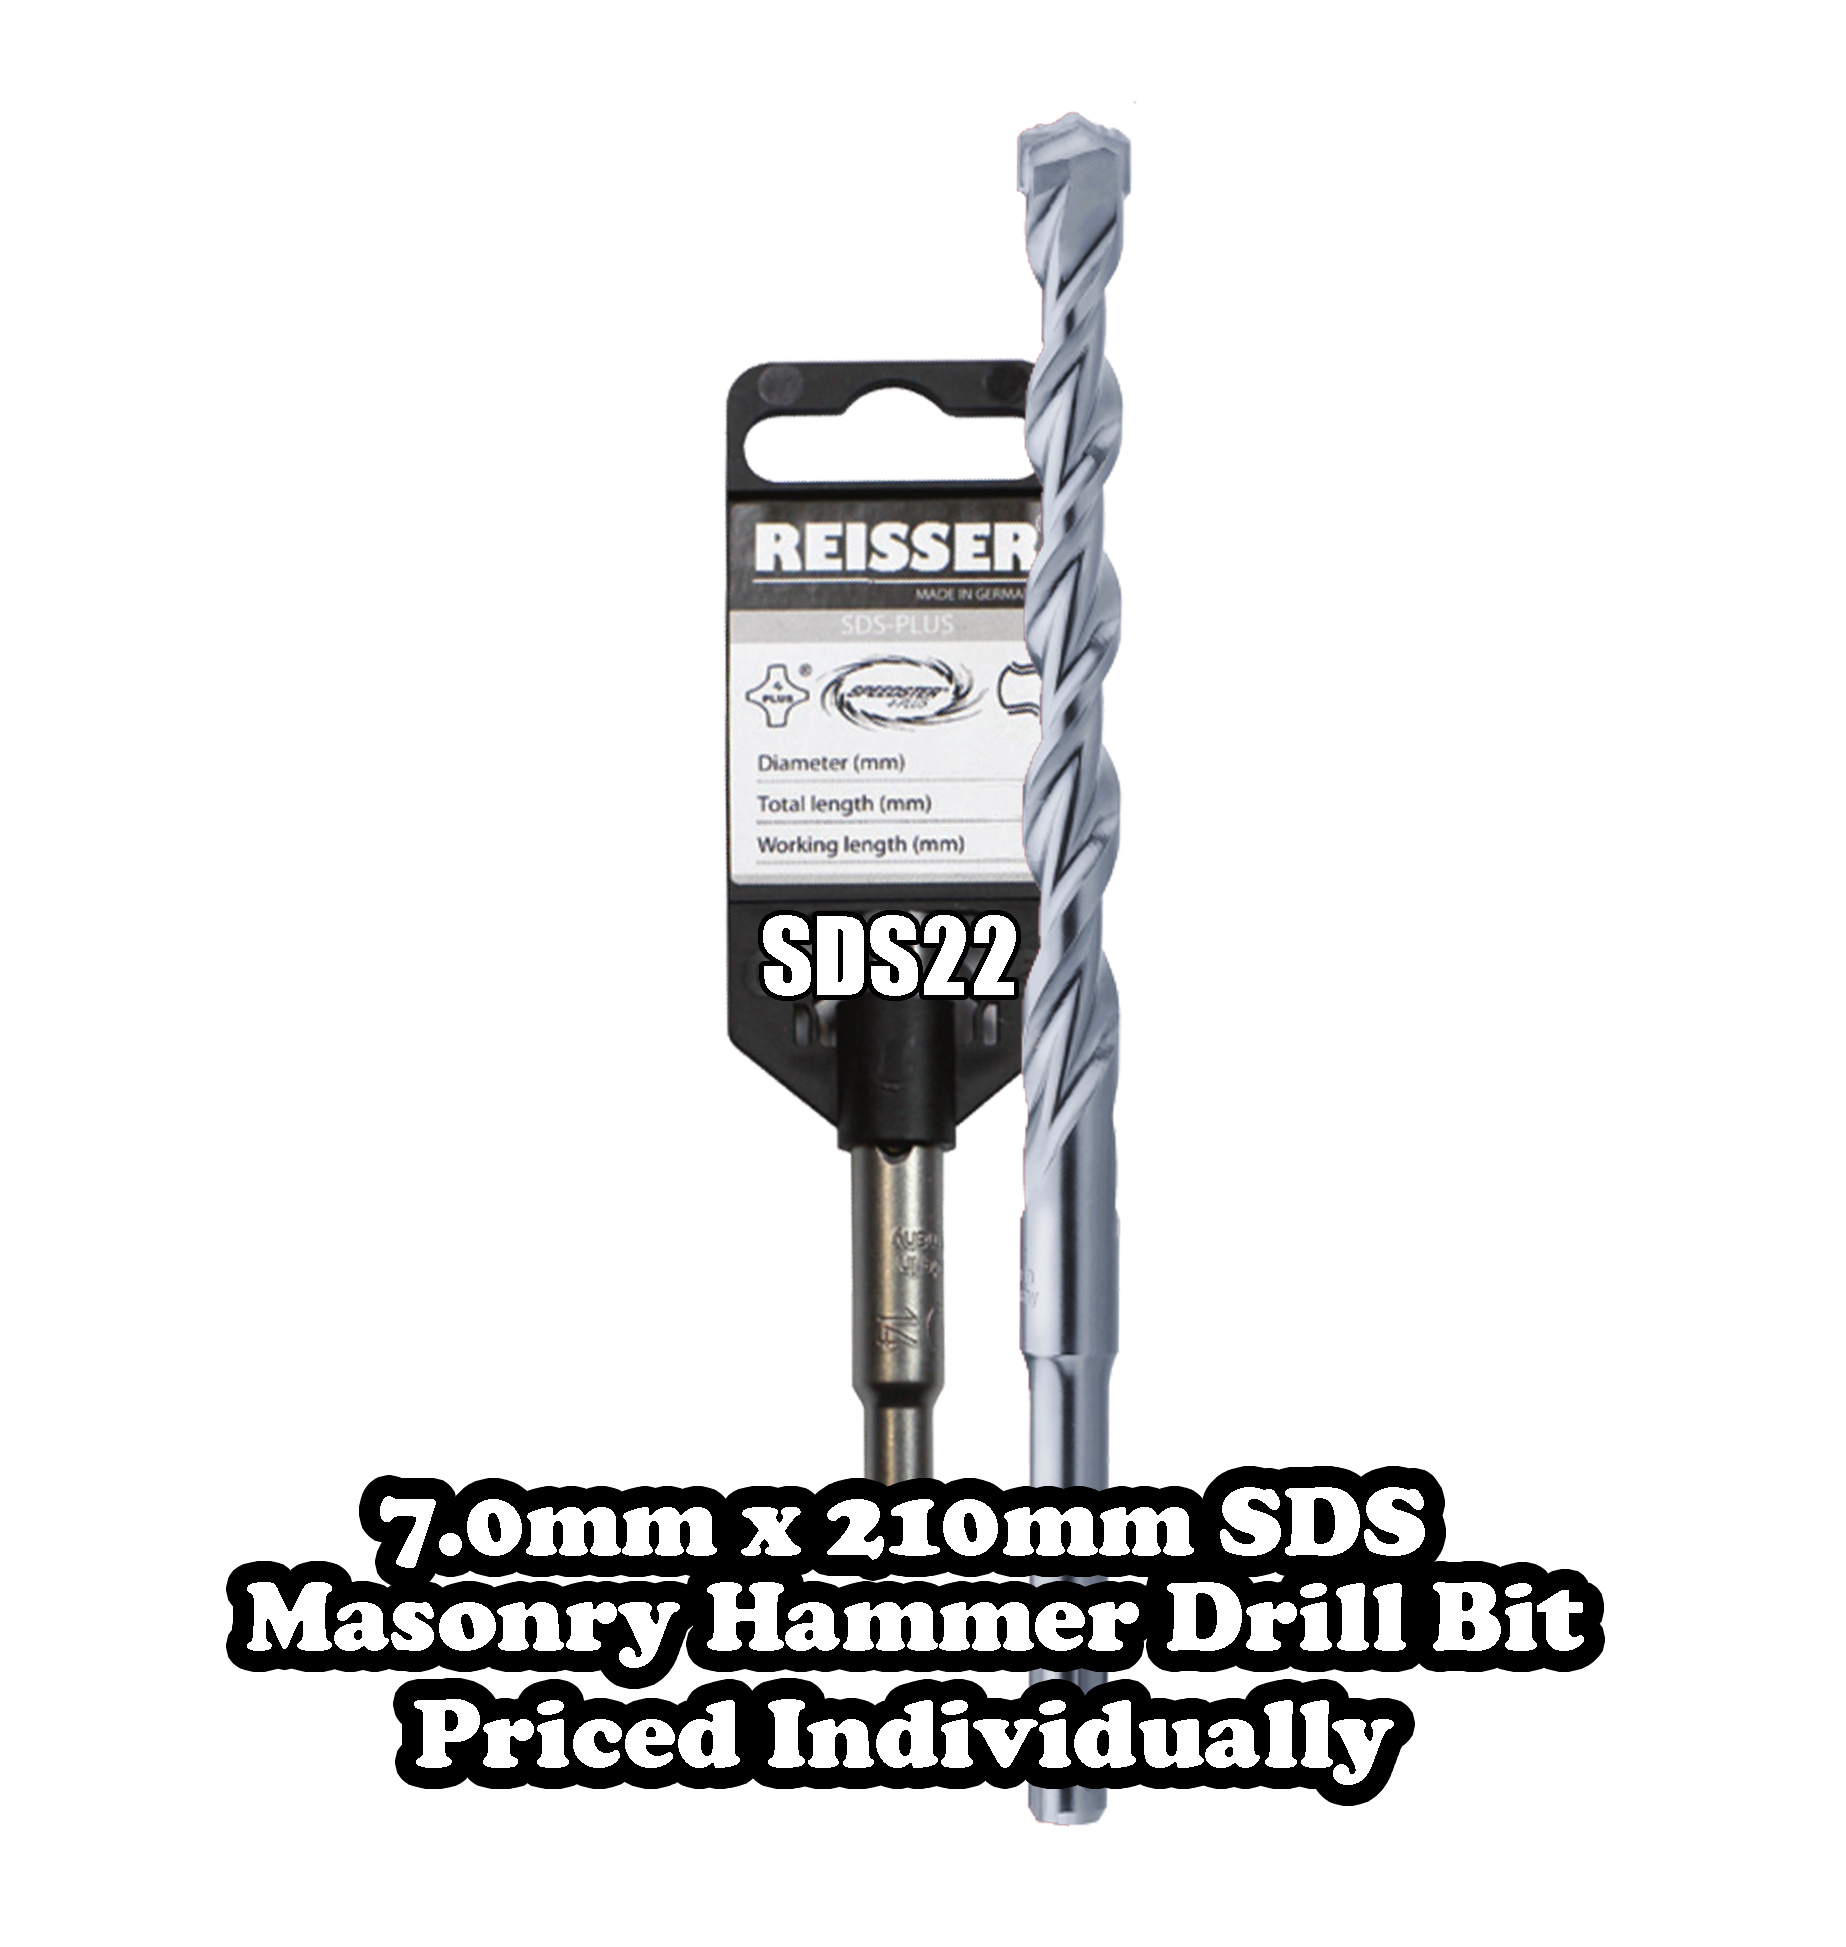 7.0mm x 210mm SDS Masonry Hammer Drill Bit